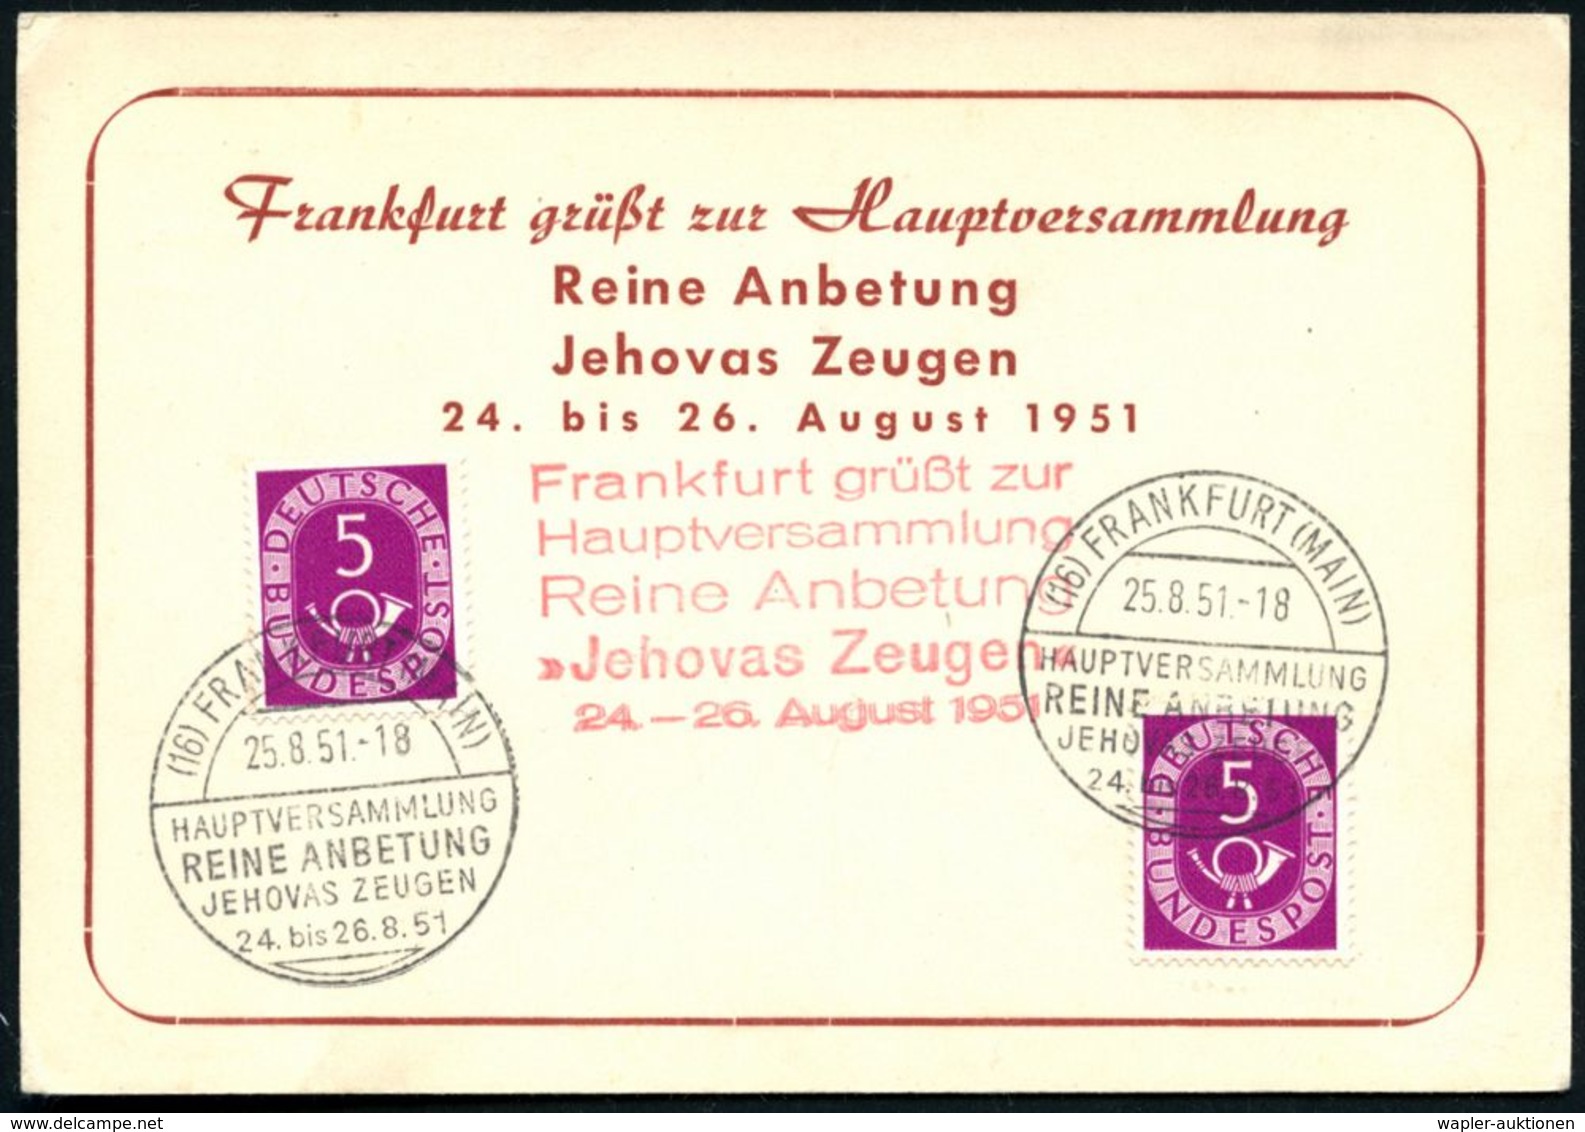 (16) FRANKFURT (MAIN)/ HAUPTVERSAMMLUNG/ REINE ANBETUNG/ JEHOVAS ZEUGEN 1951 (25.8.) SSt + Roter HdN: Frankfurt Grüßt Zu - Christendom